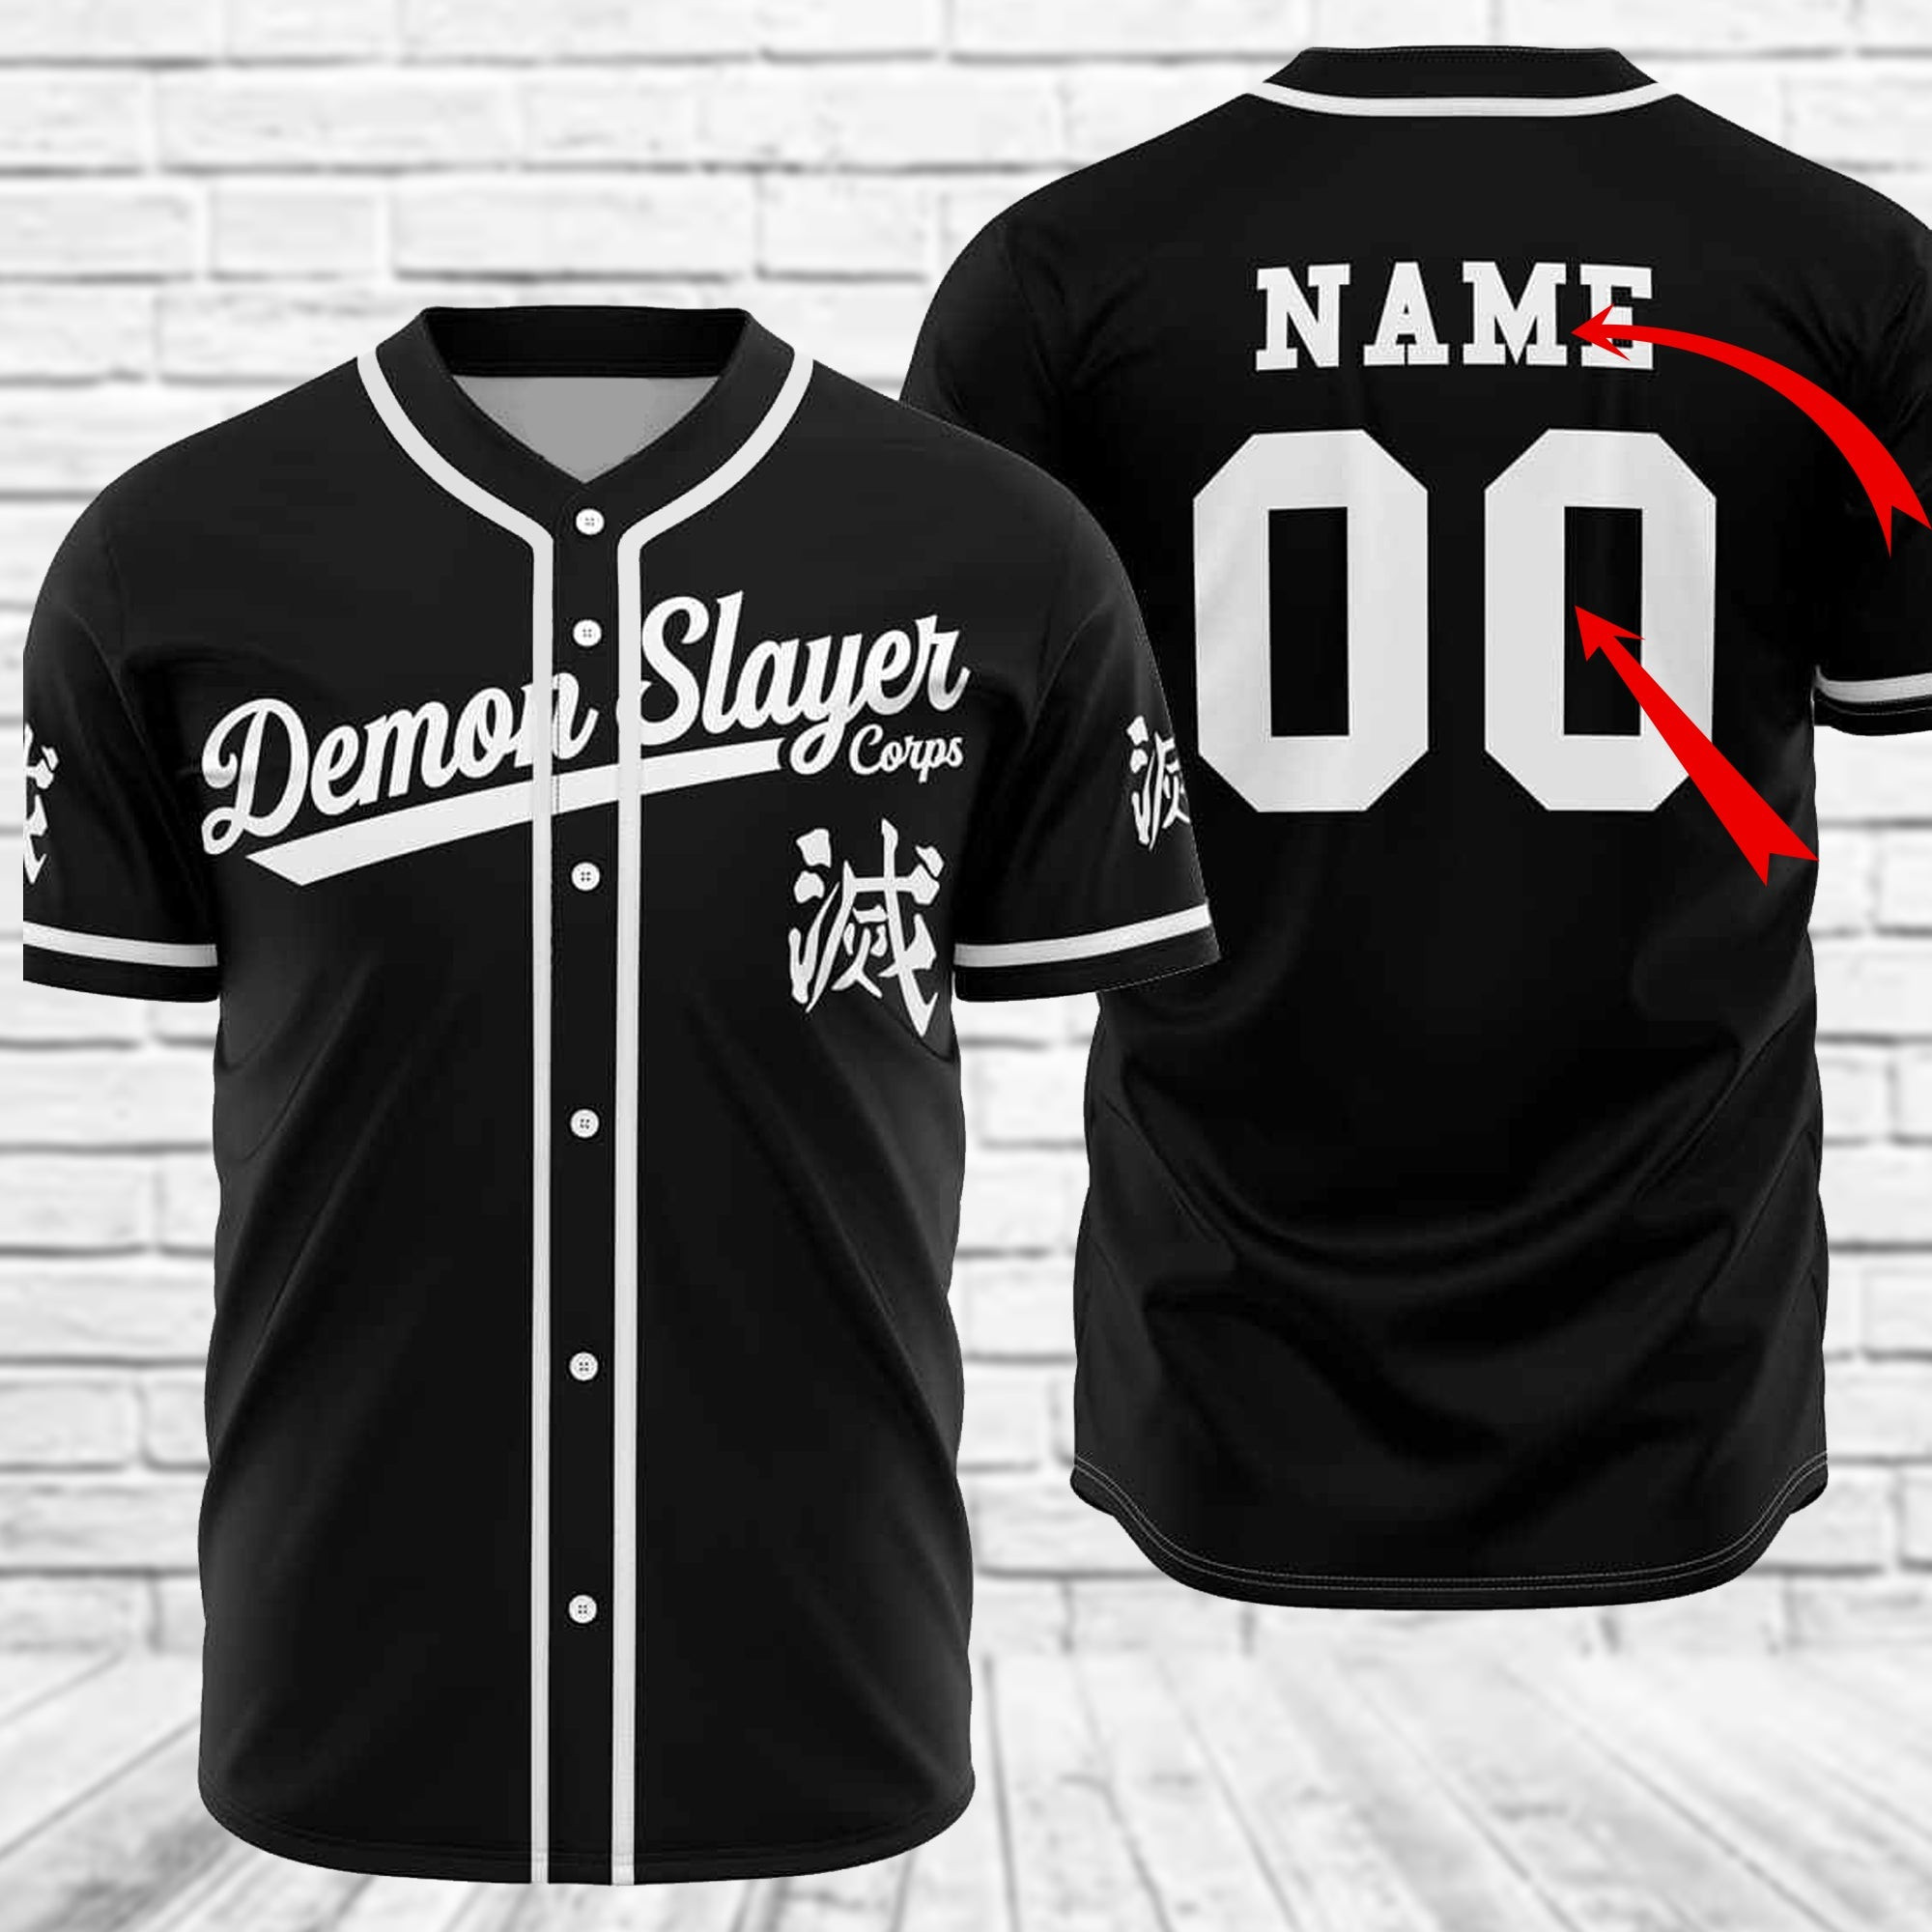 Personalized Anime The Demon Slayer Corps Baseball Jersey, Unisex Baseball Jersey for Men Women